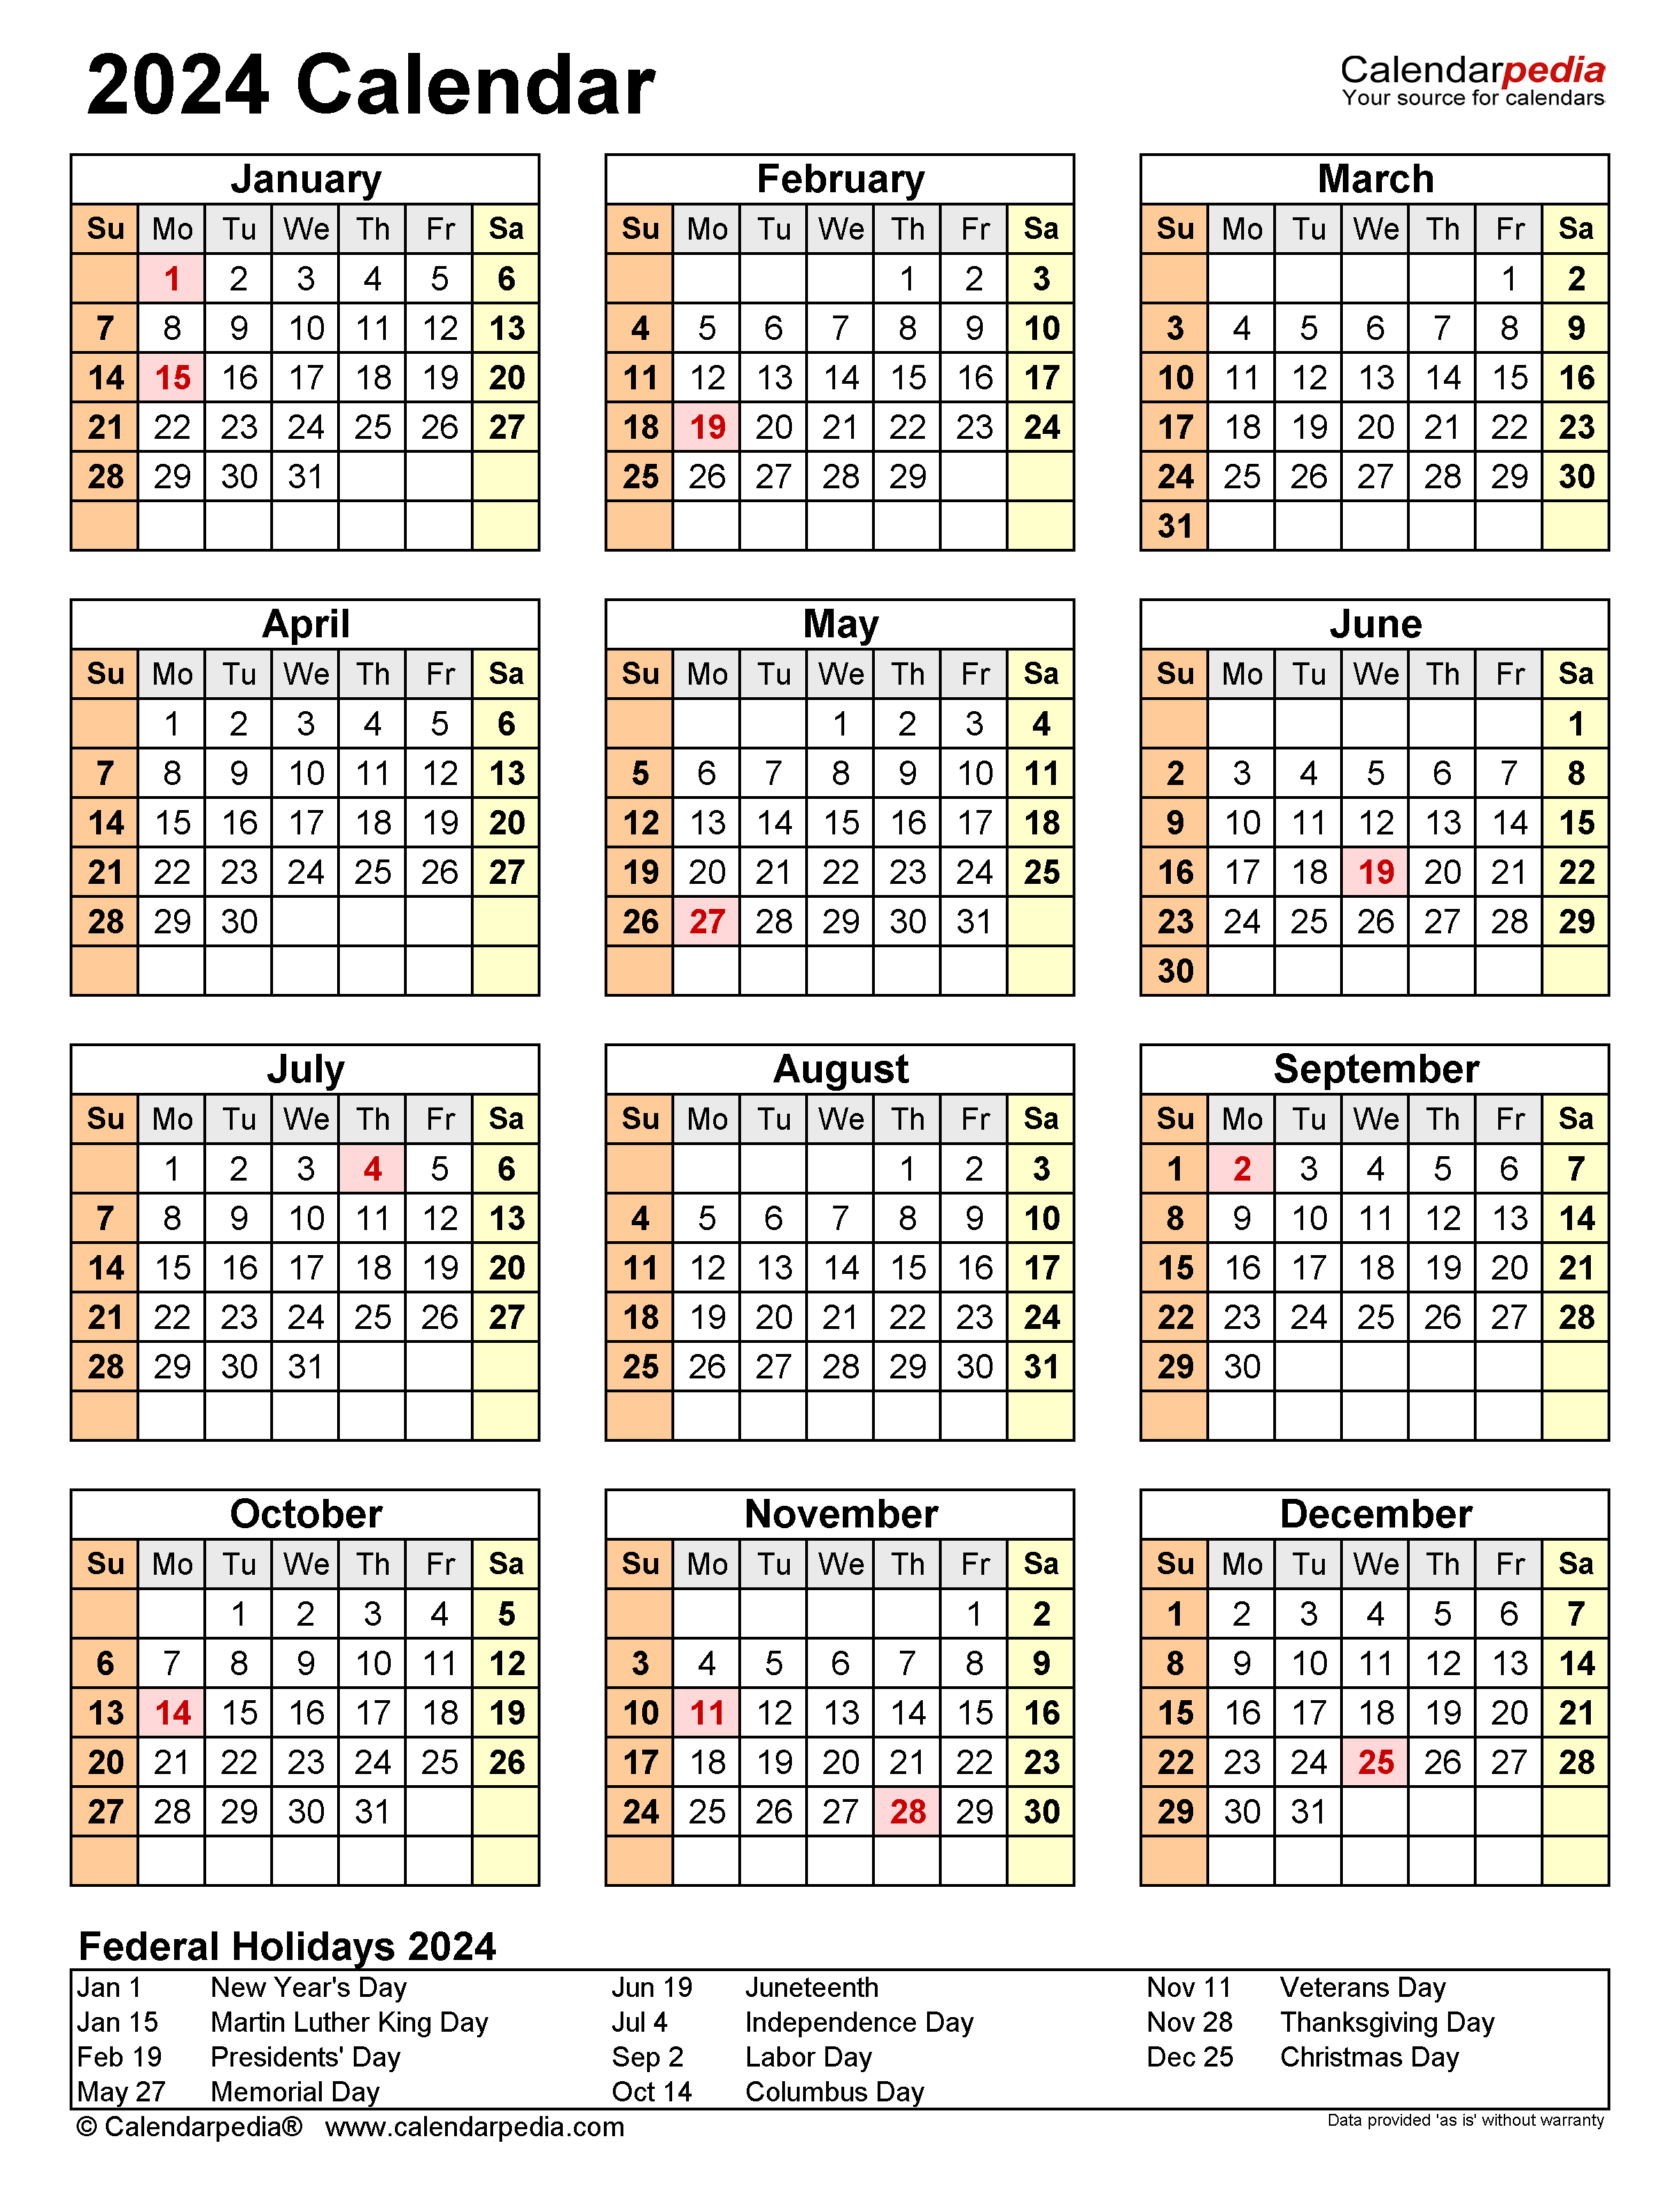 Free Printable 2024 Calendar With Holidays Crownflourmills - Free Printable 2024 Calendar With Holidays Philippines Pdf